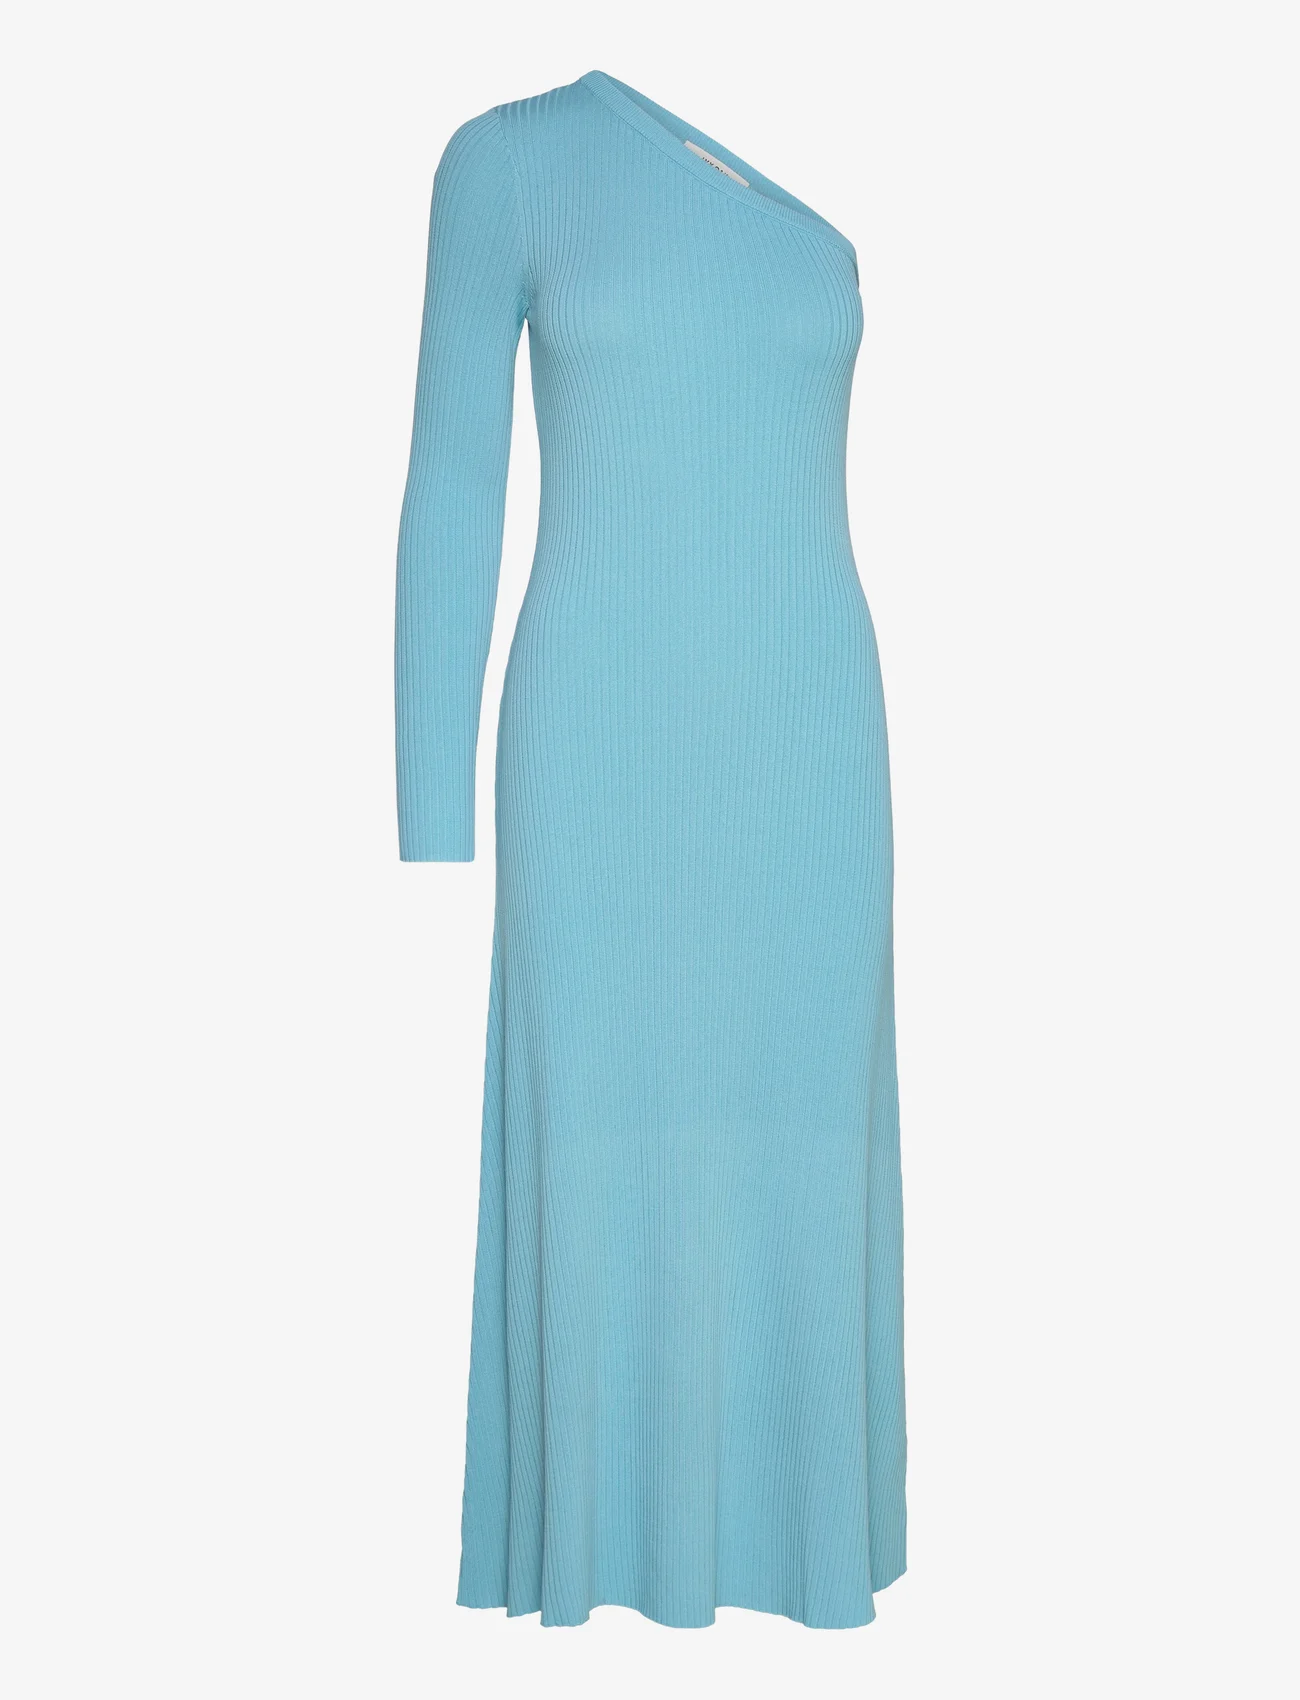 IVY OAK - Knitted Dress - ballīšu apģērbs par outlet cenām - summer sky - 0